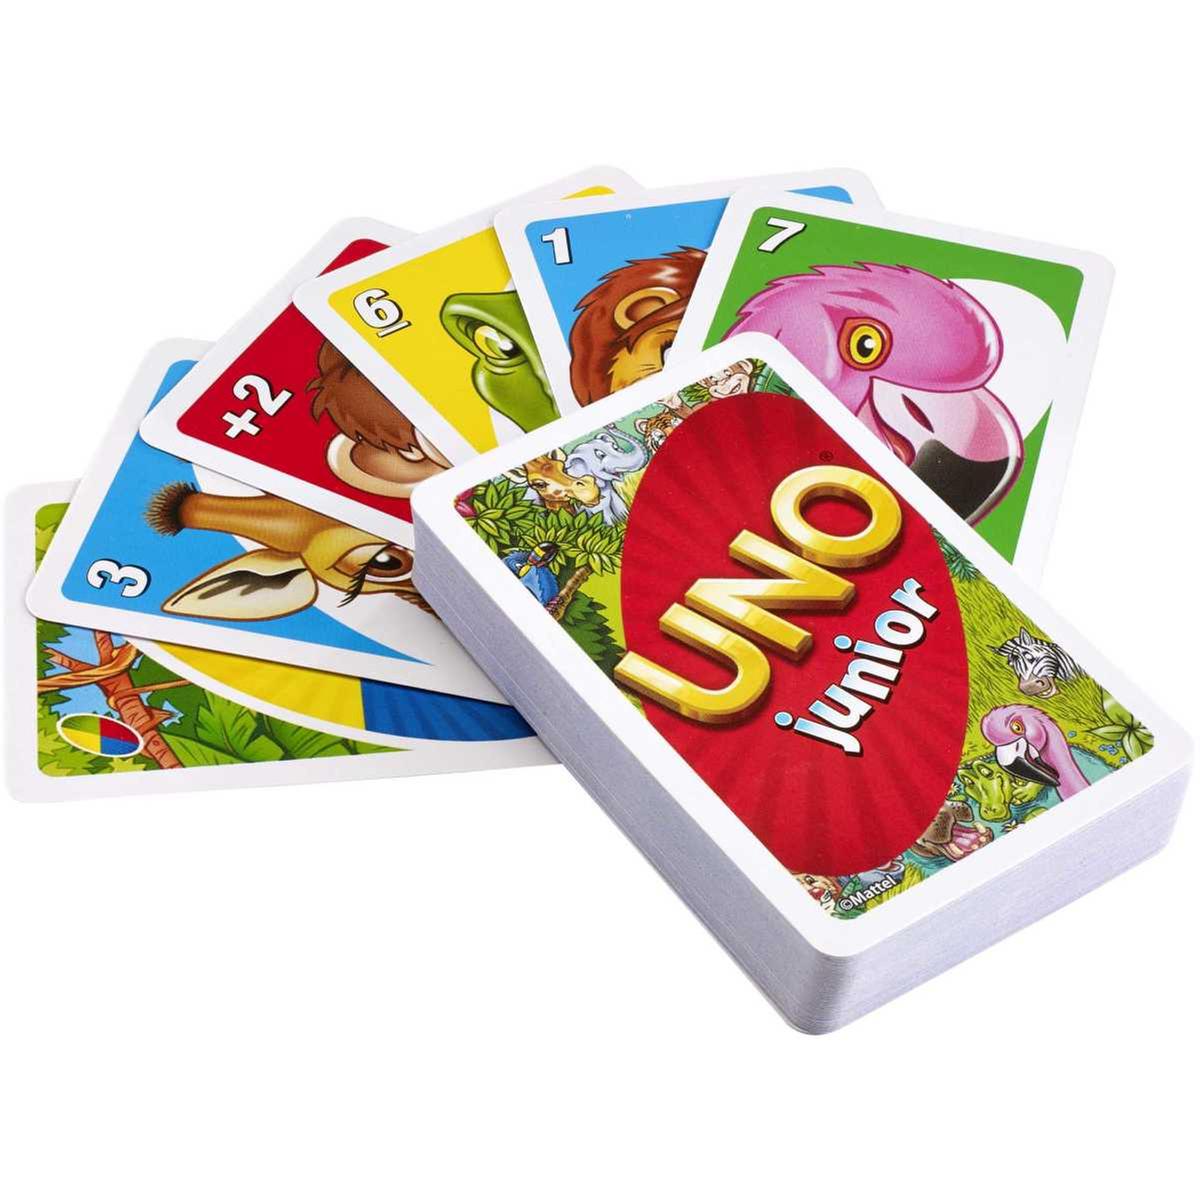 Mattel Games - UNO júnior - Jogo de cartas